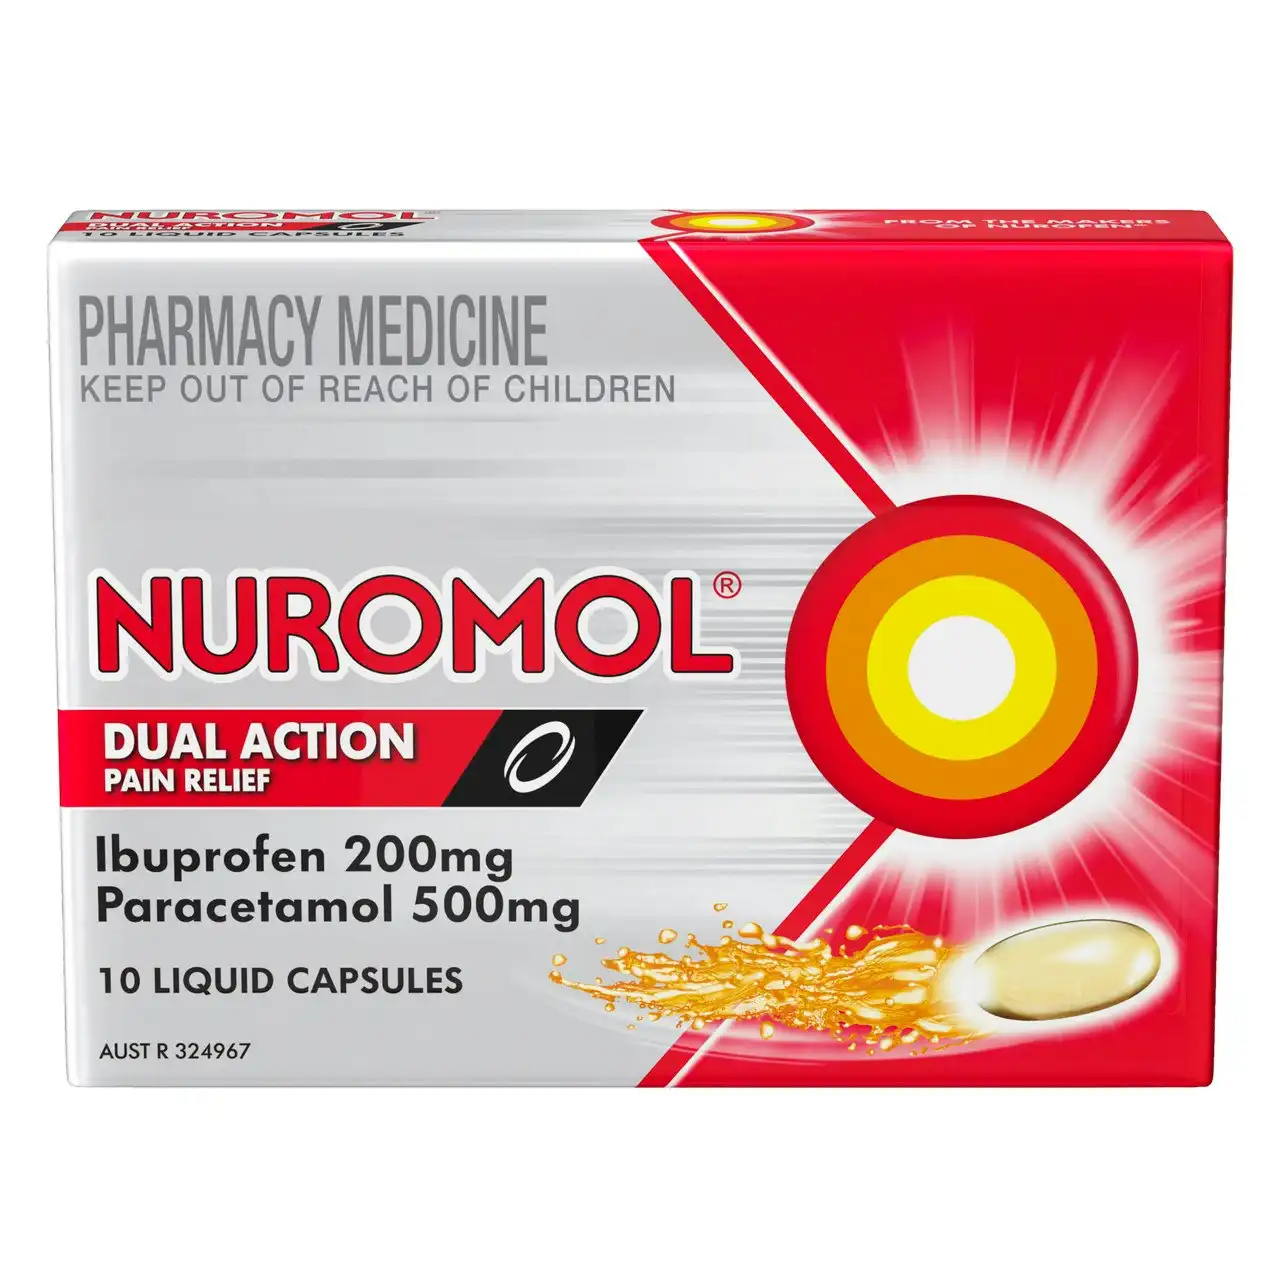 NUROMOL Strong Pain Relief Liquid Capsules 200mg Ibuprofen/500mg Paracetamol 10 pack